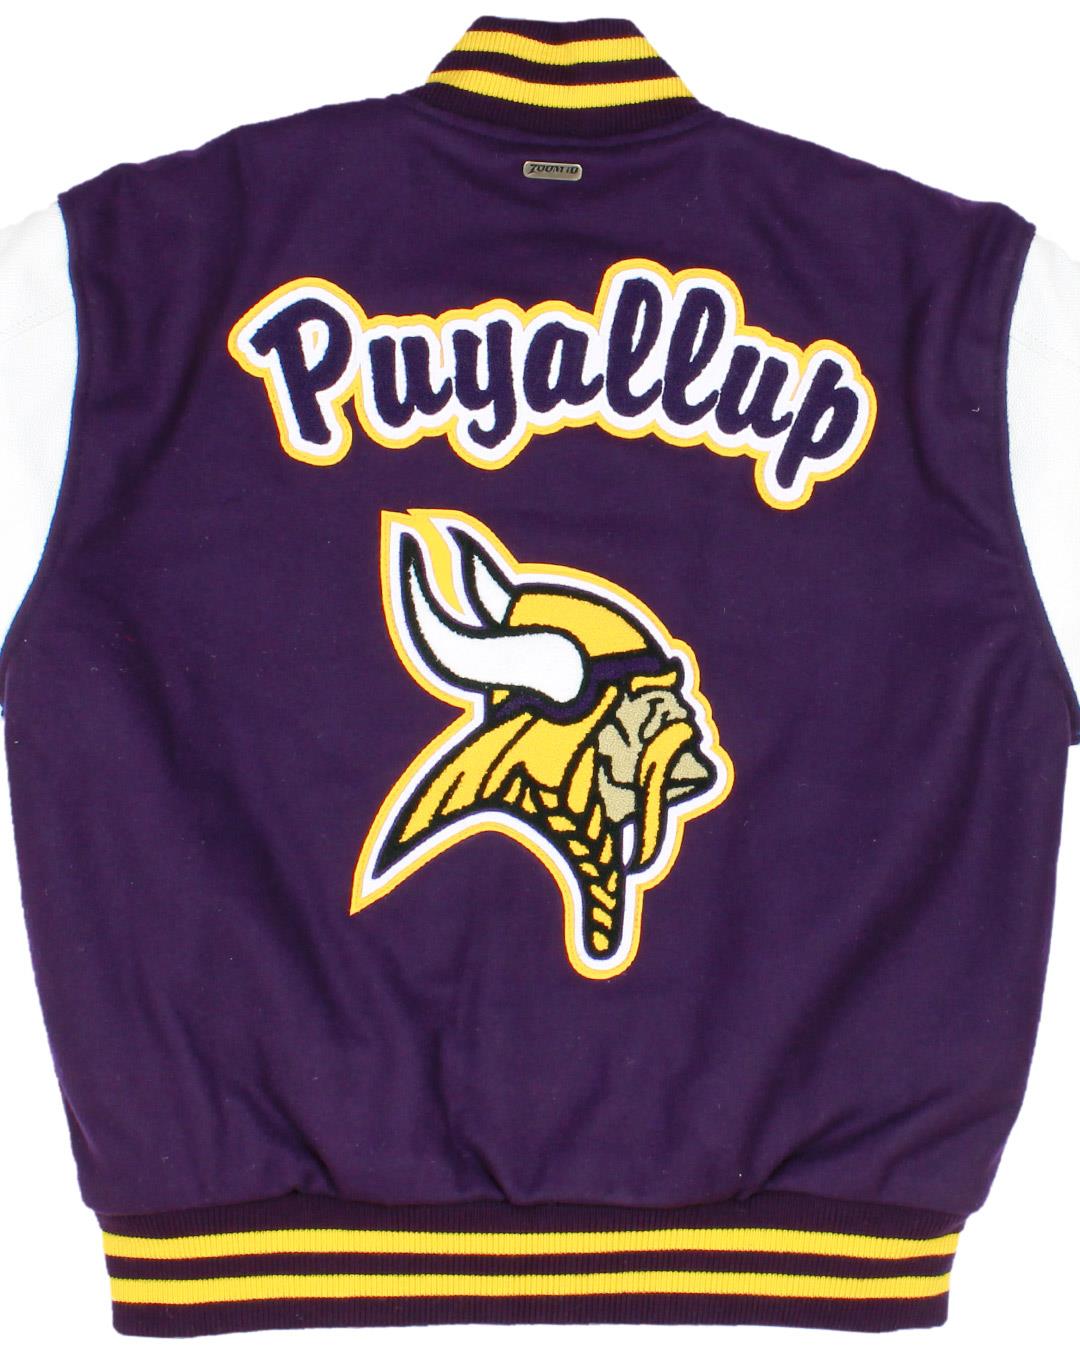 Puyallup High School Letterman Jacket, Puyallup, WA - Back